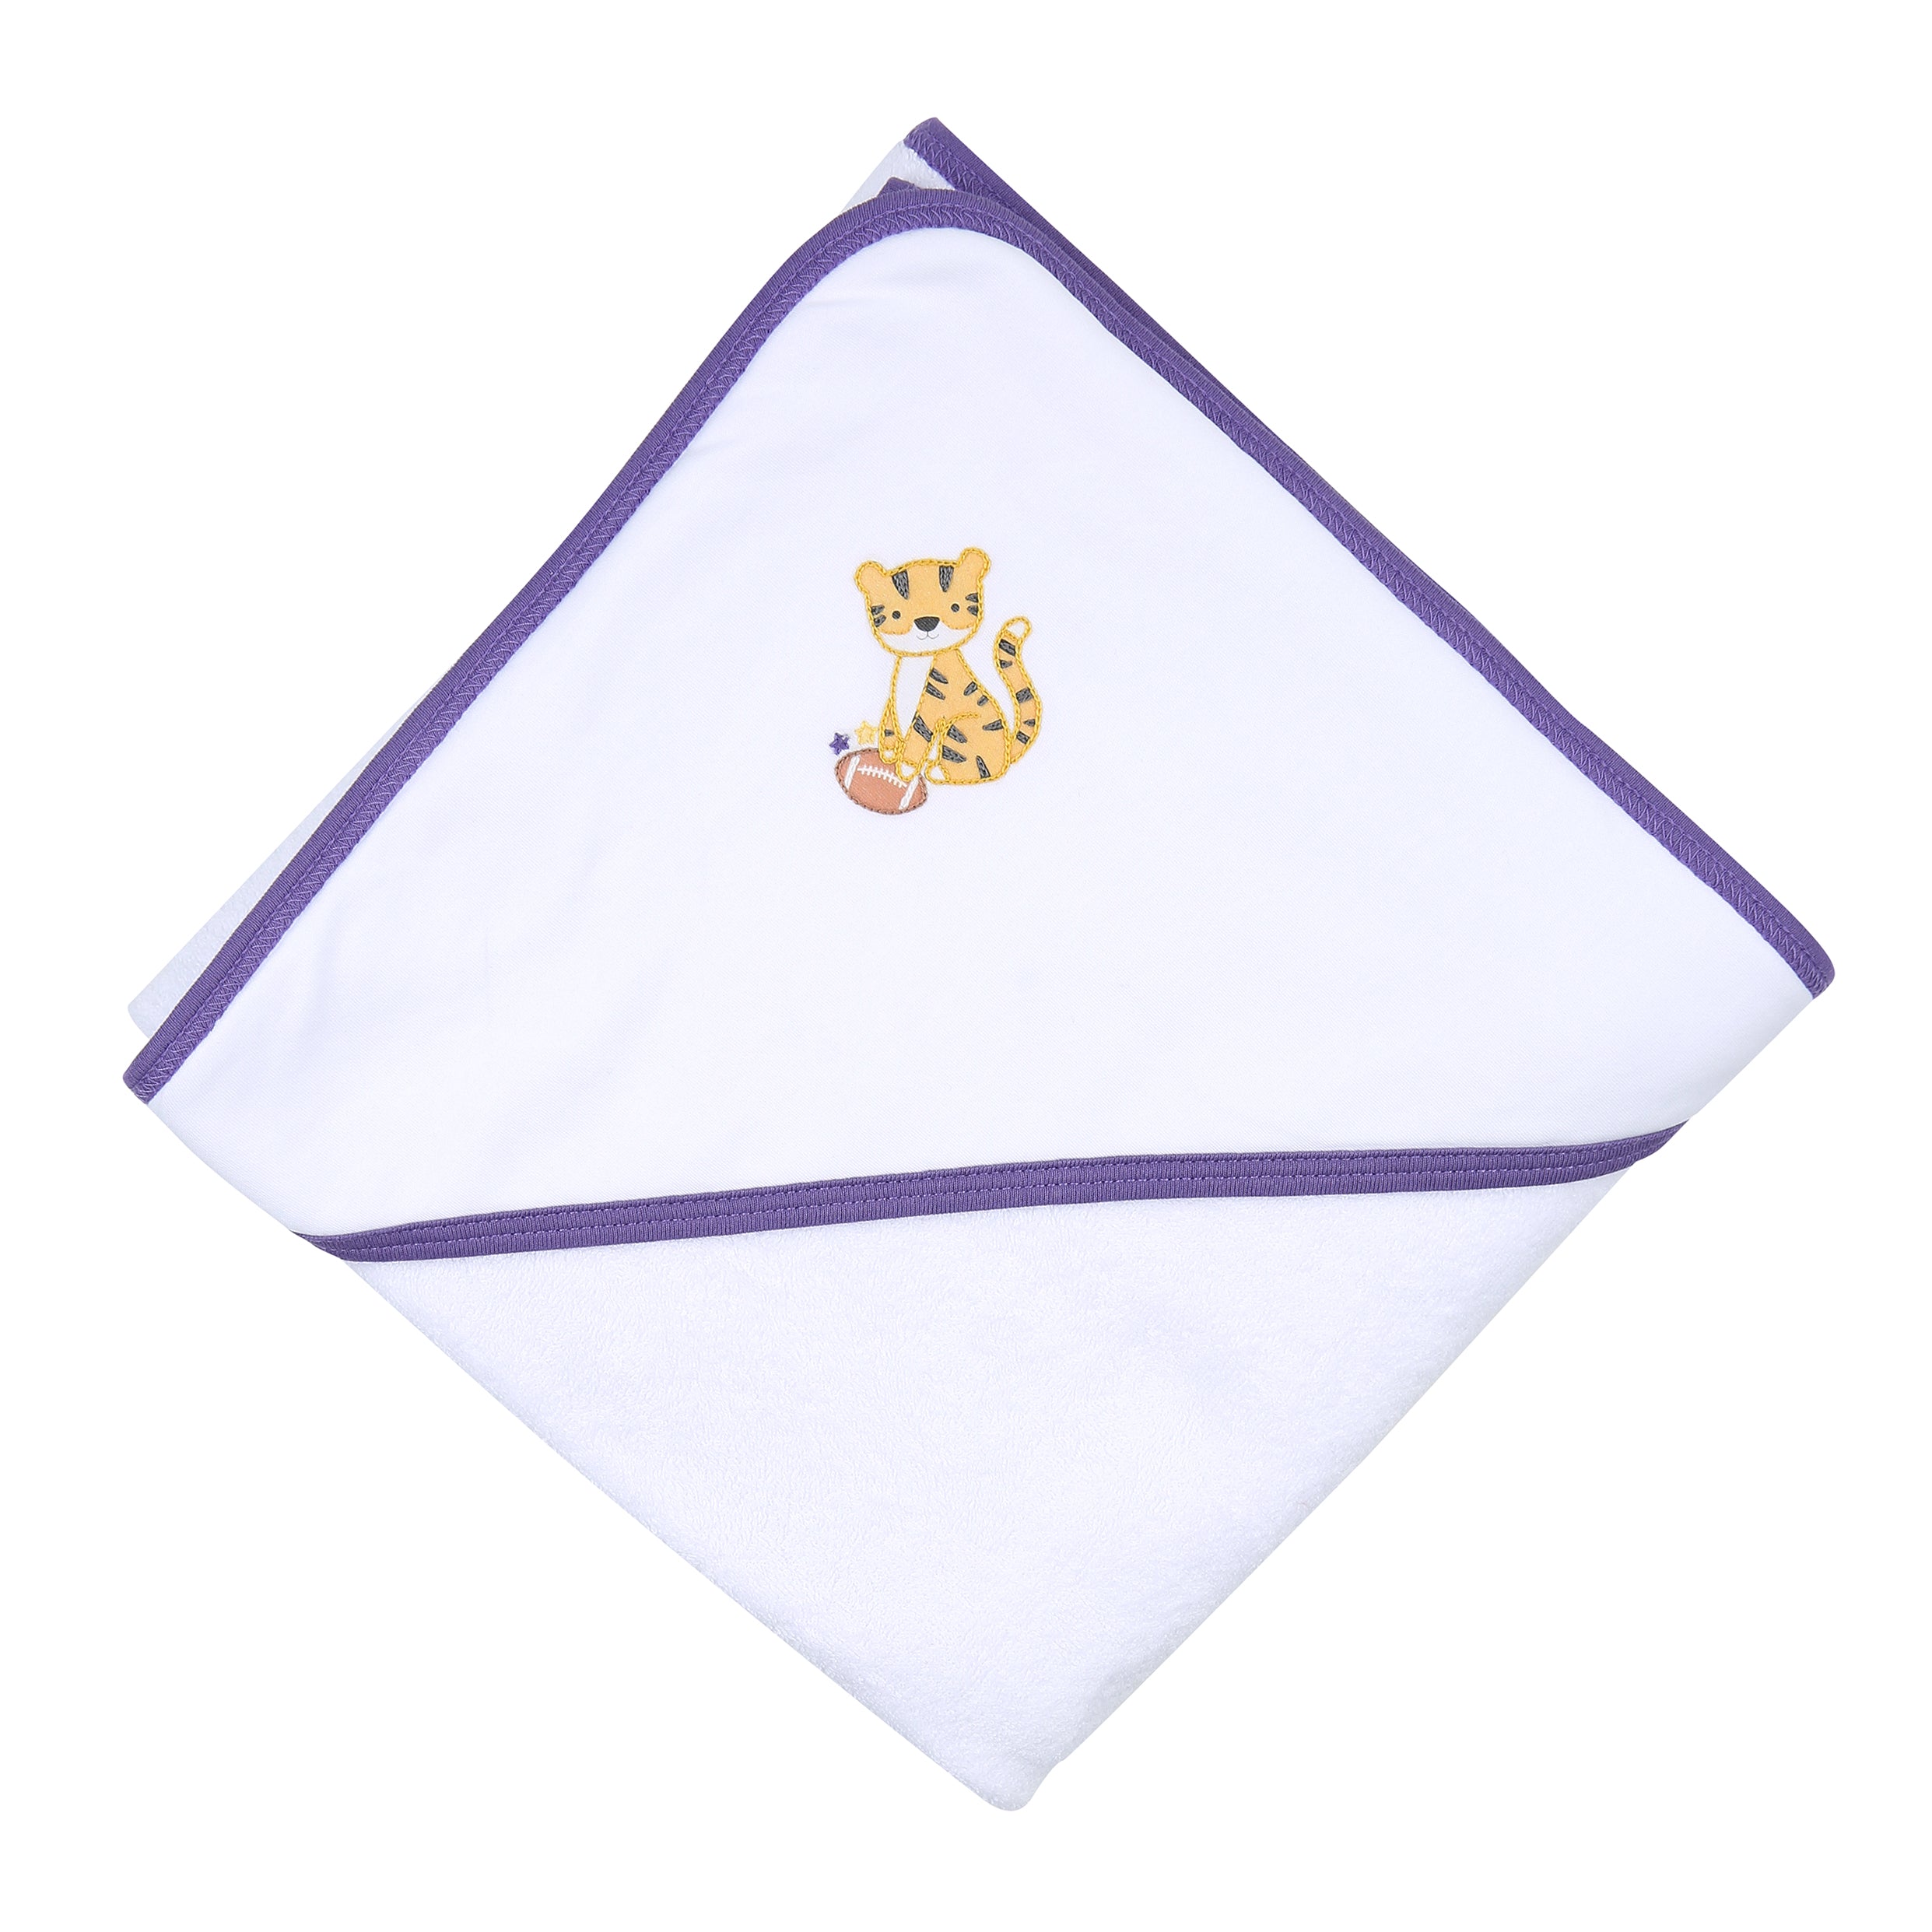 Tiger Football Hooded Towel - Purple/Gold